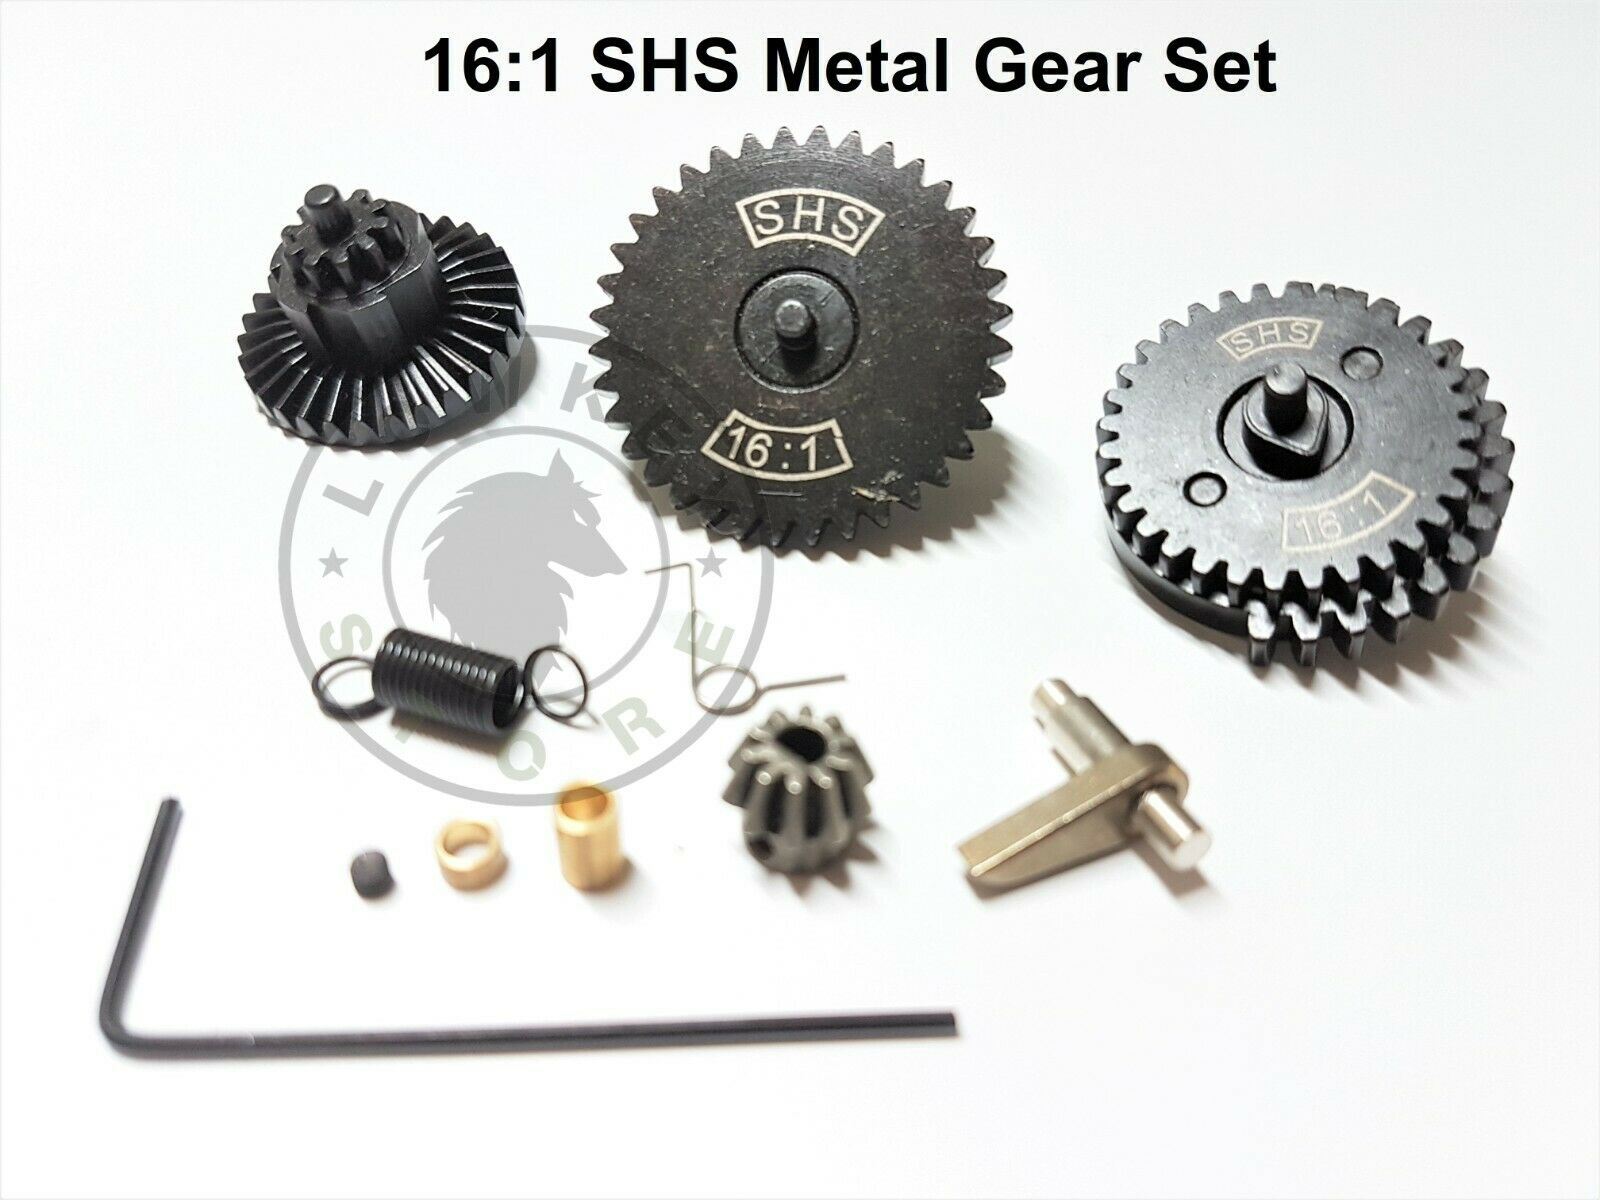 SHS 18:1 16:1 High Speed CNC Metal Gear For Gen8 9 10 M4A1 SCAR Gel Ball Blaster